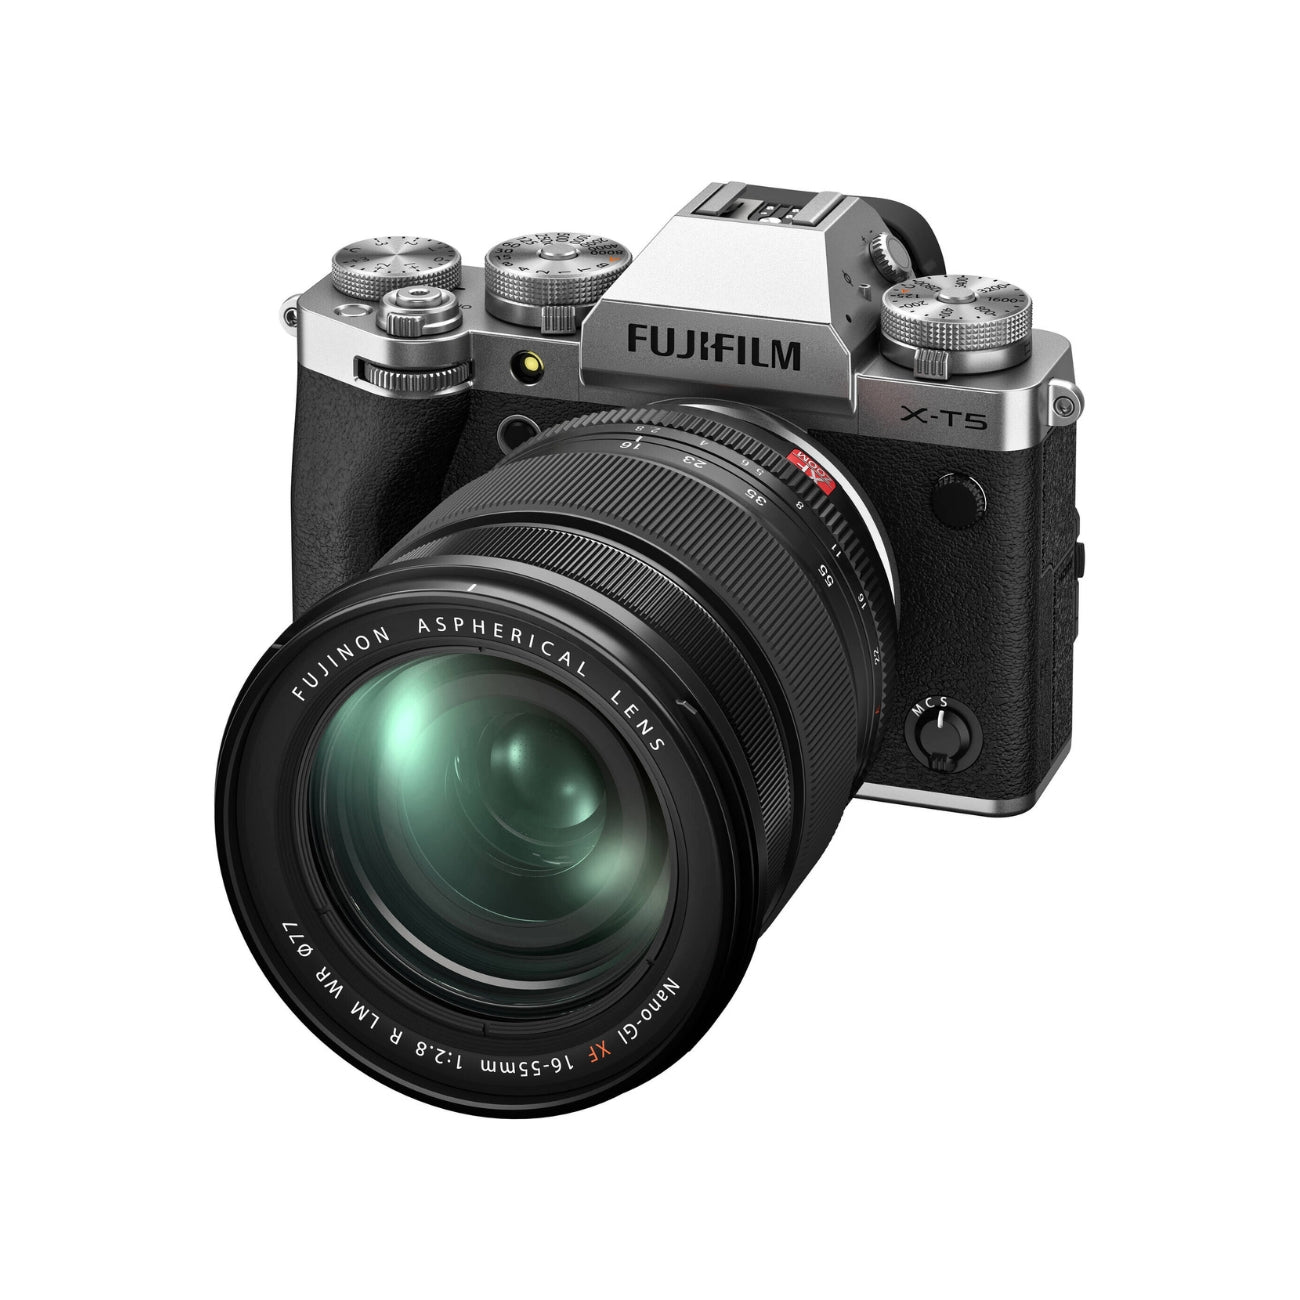 Fujifilm X-T5 Mirrorless Camera (Silver) with Lens